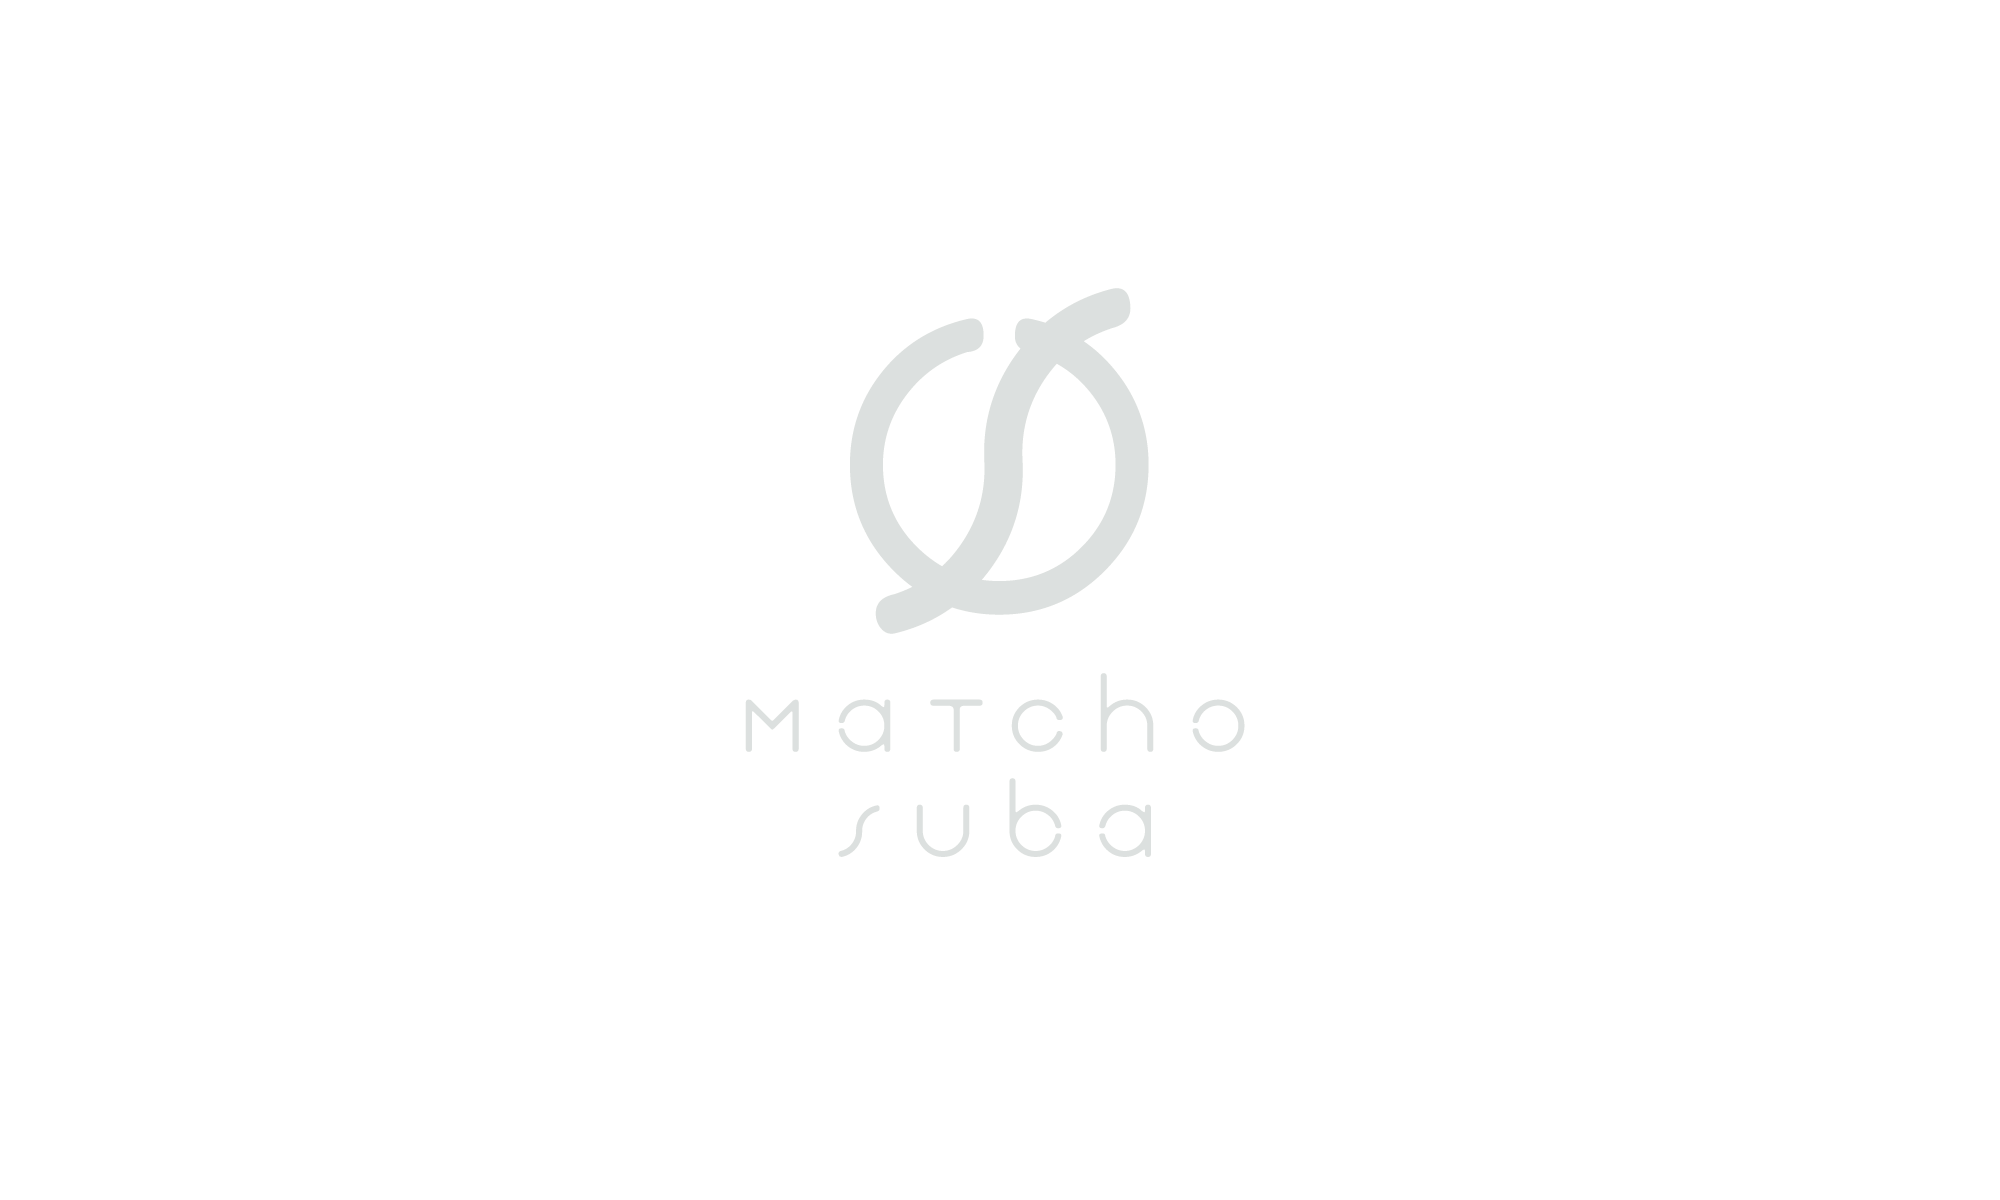 Suba Logo - Matchosuba